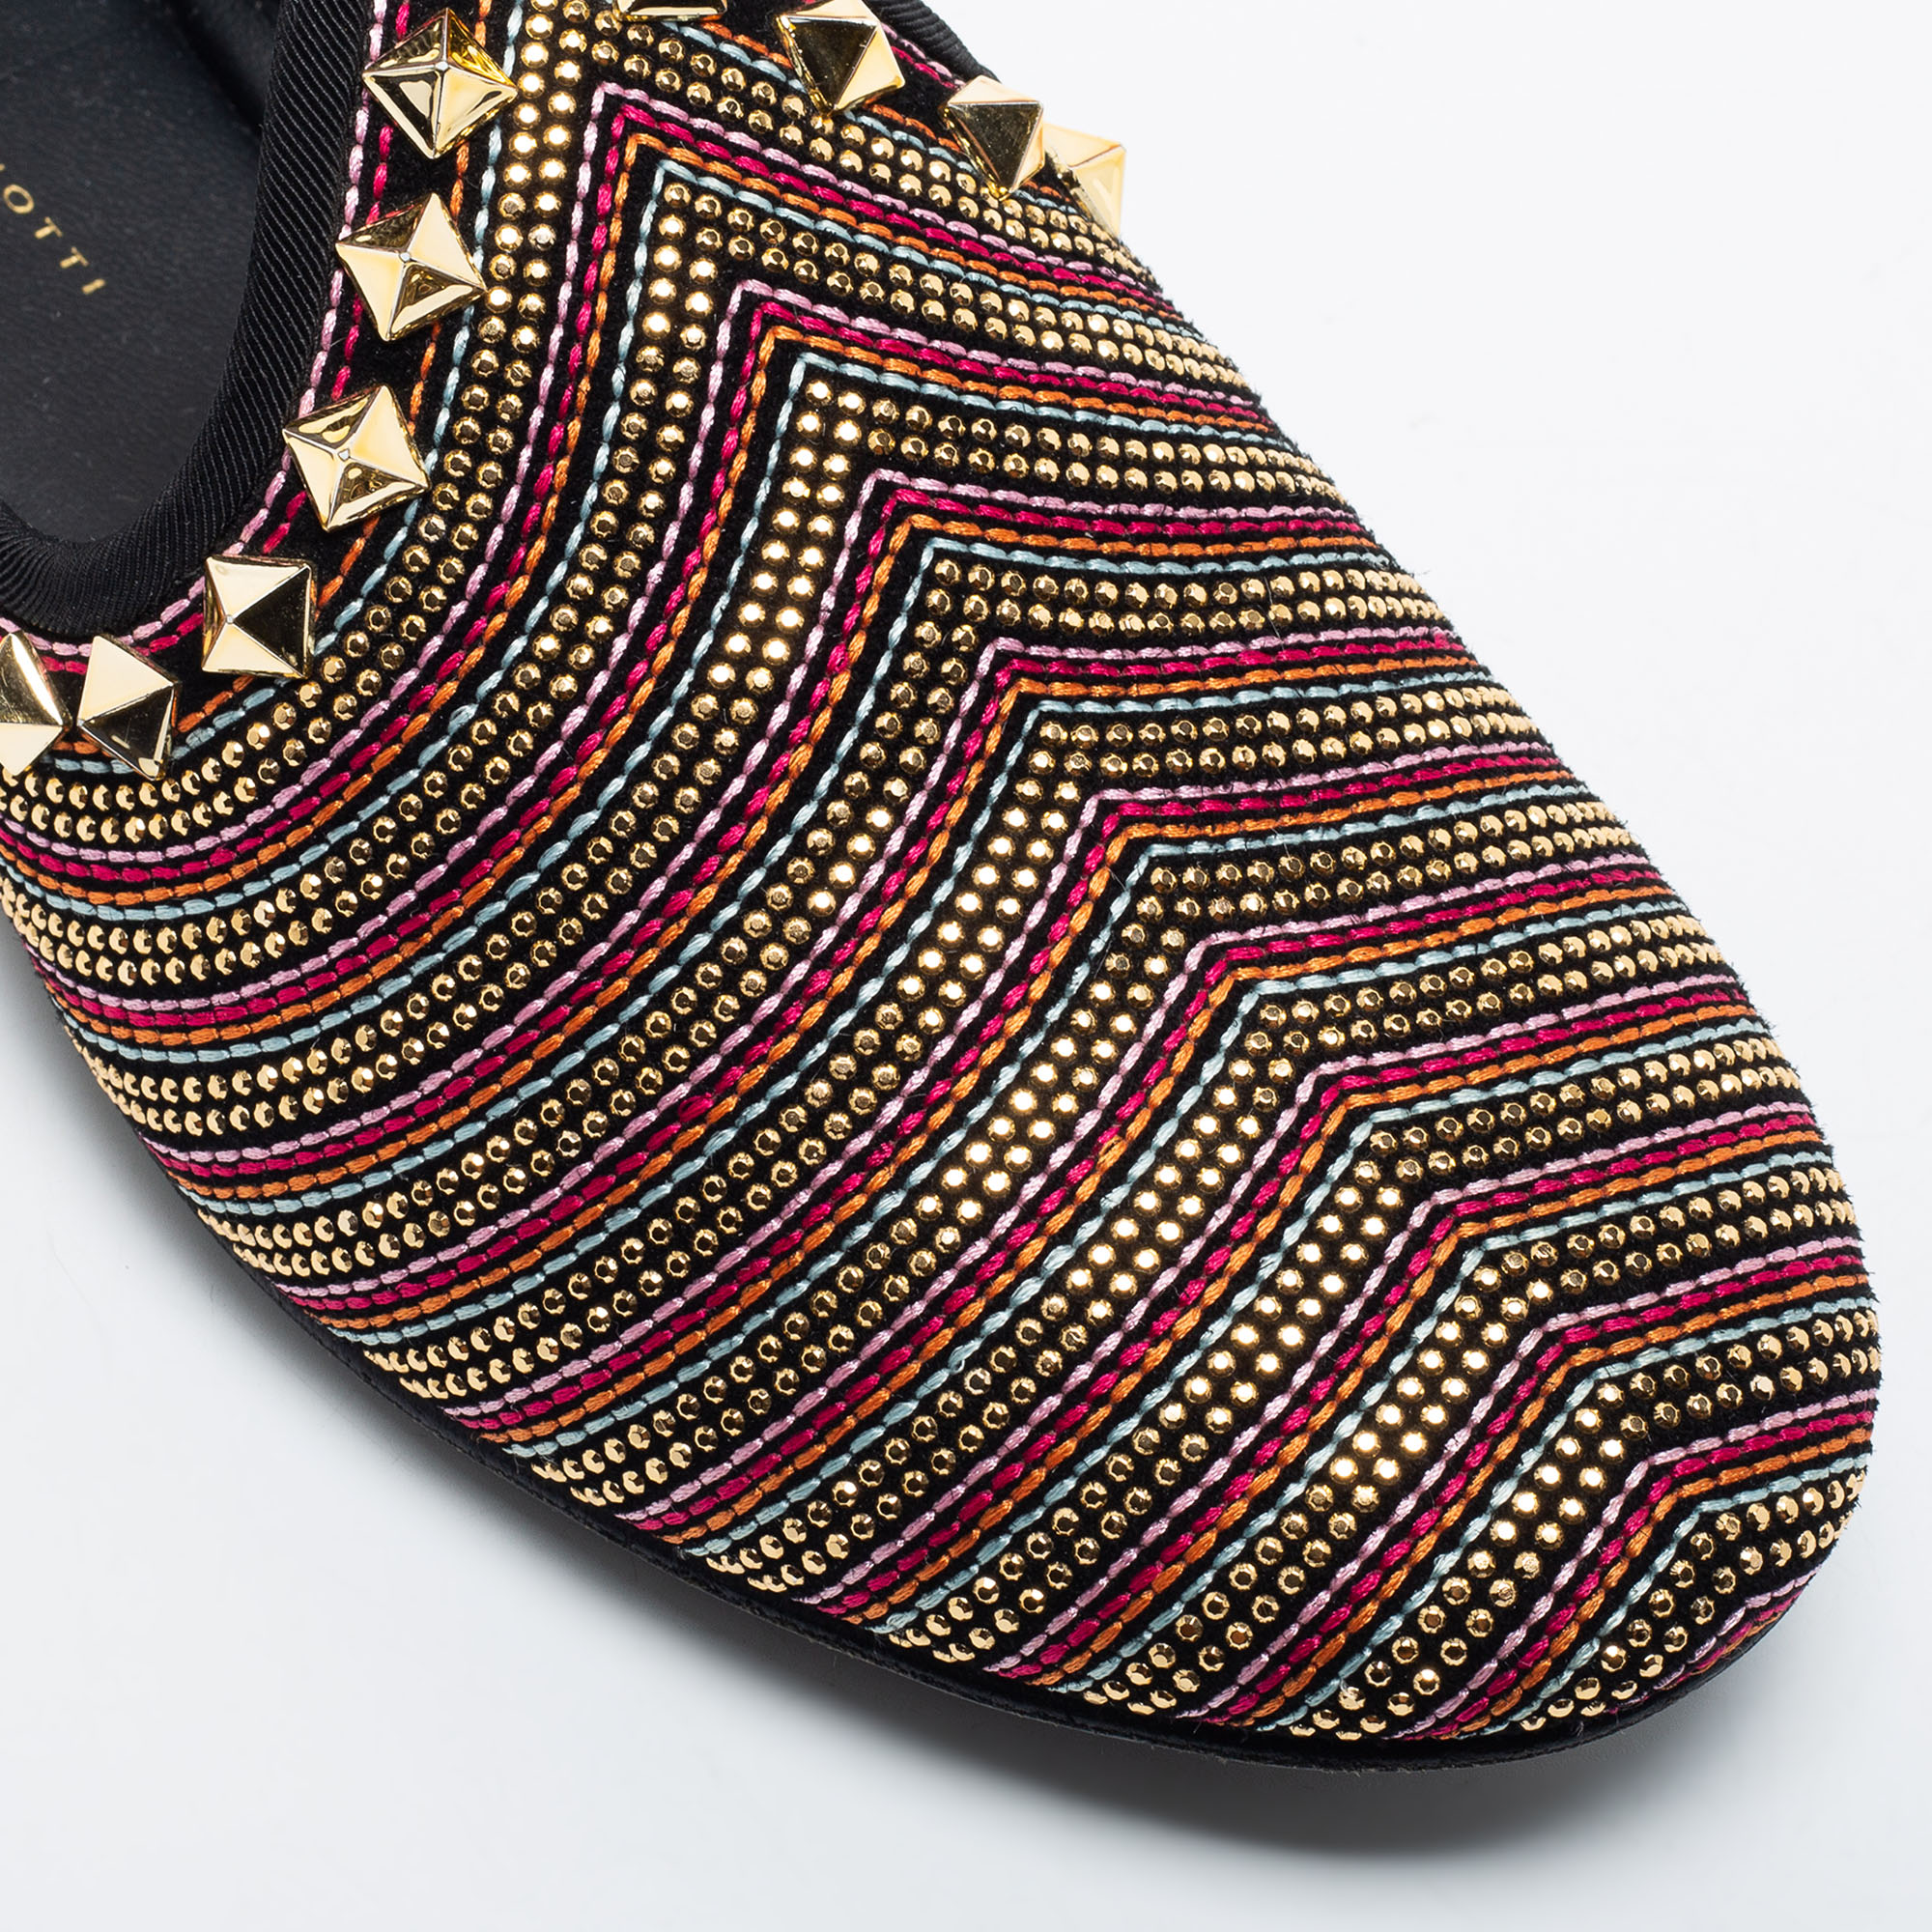 Giuseppe Zanotti Multicolor Embellished Suede Smoking Slippers Size 41